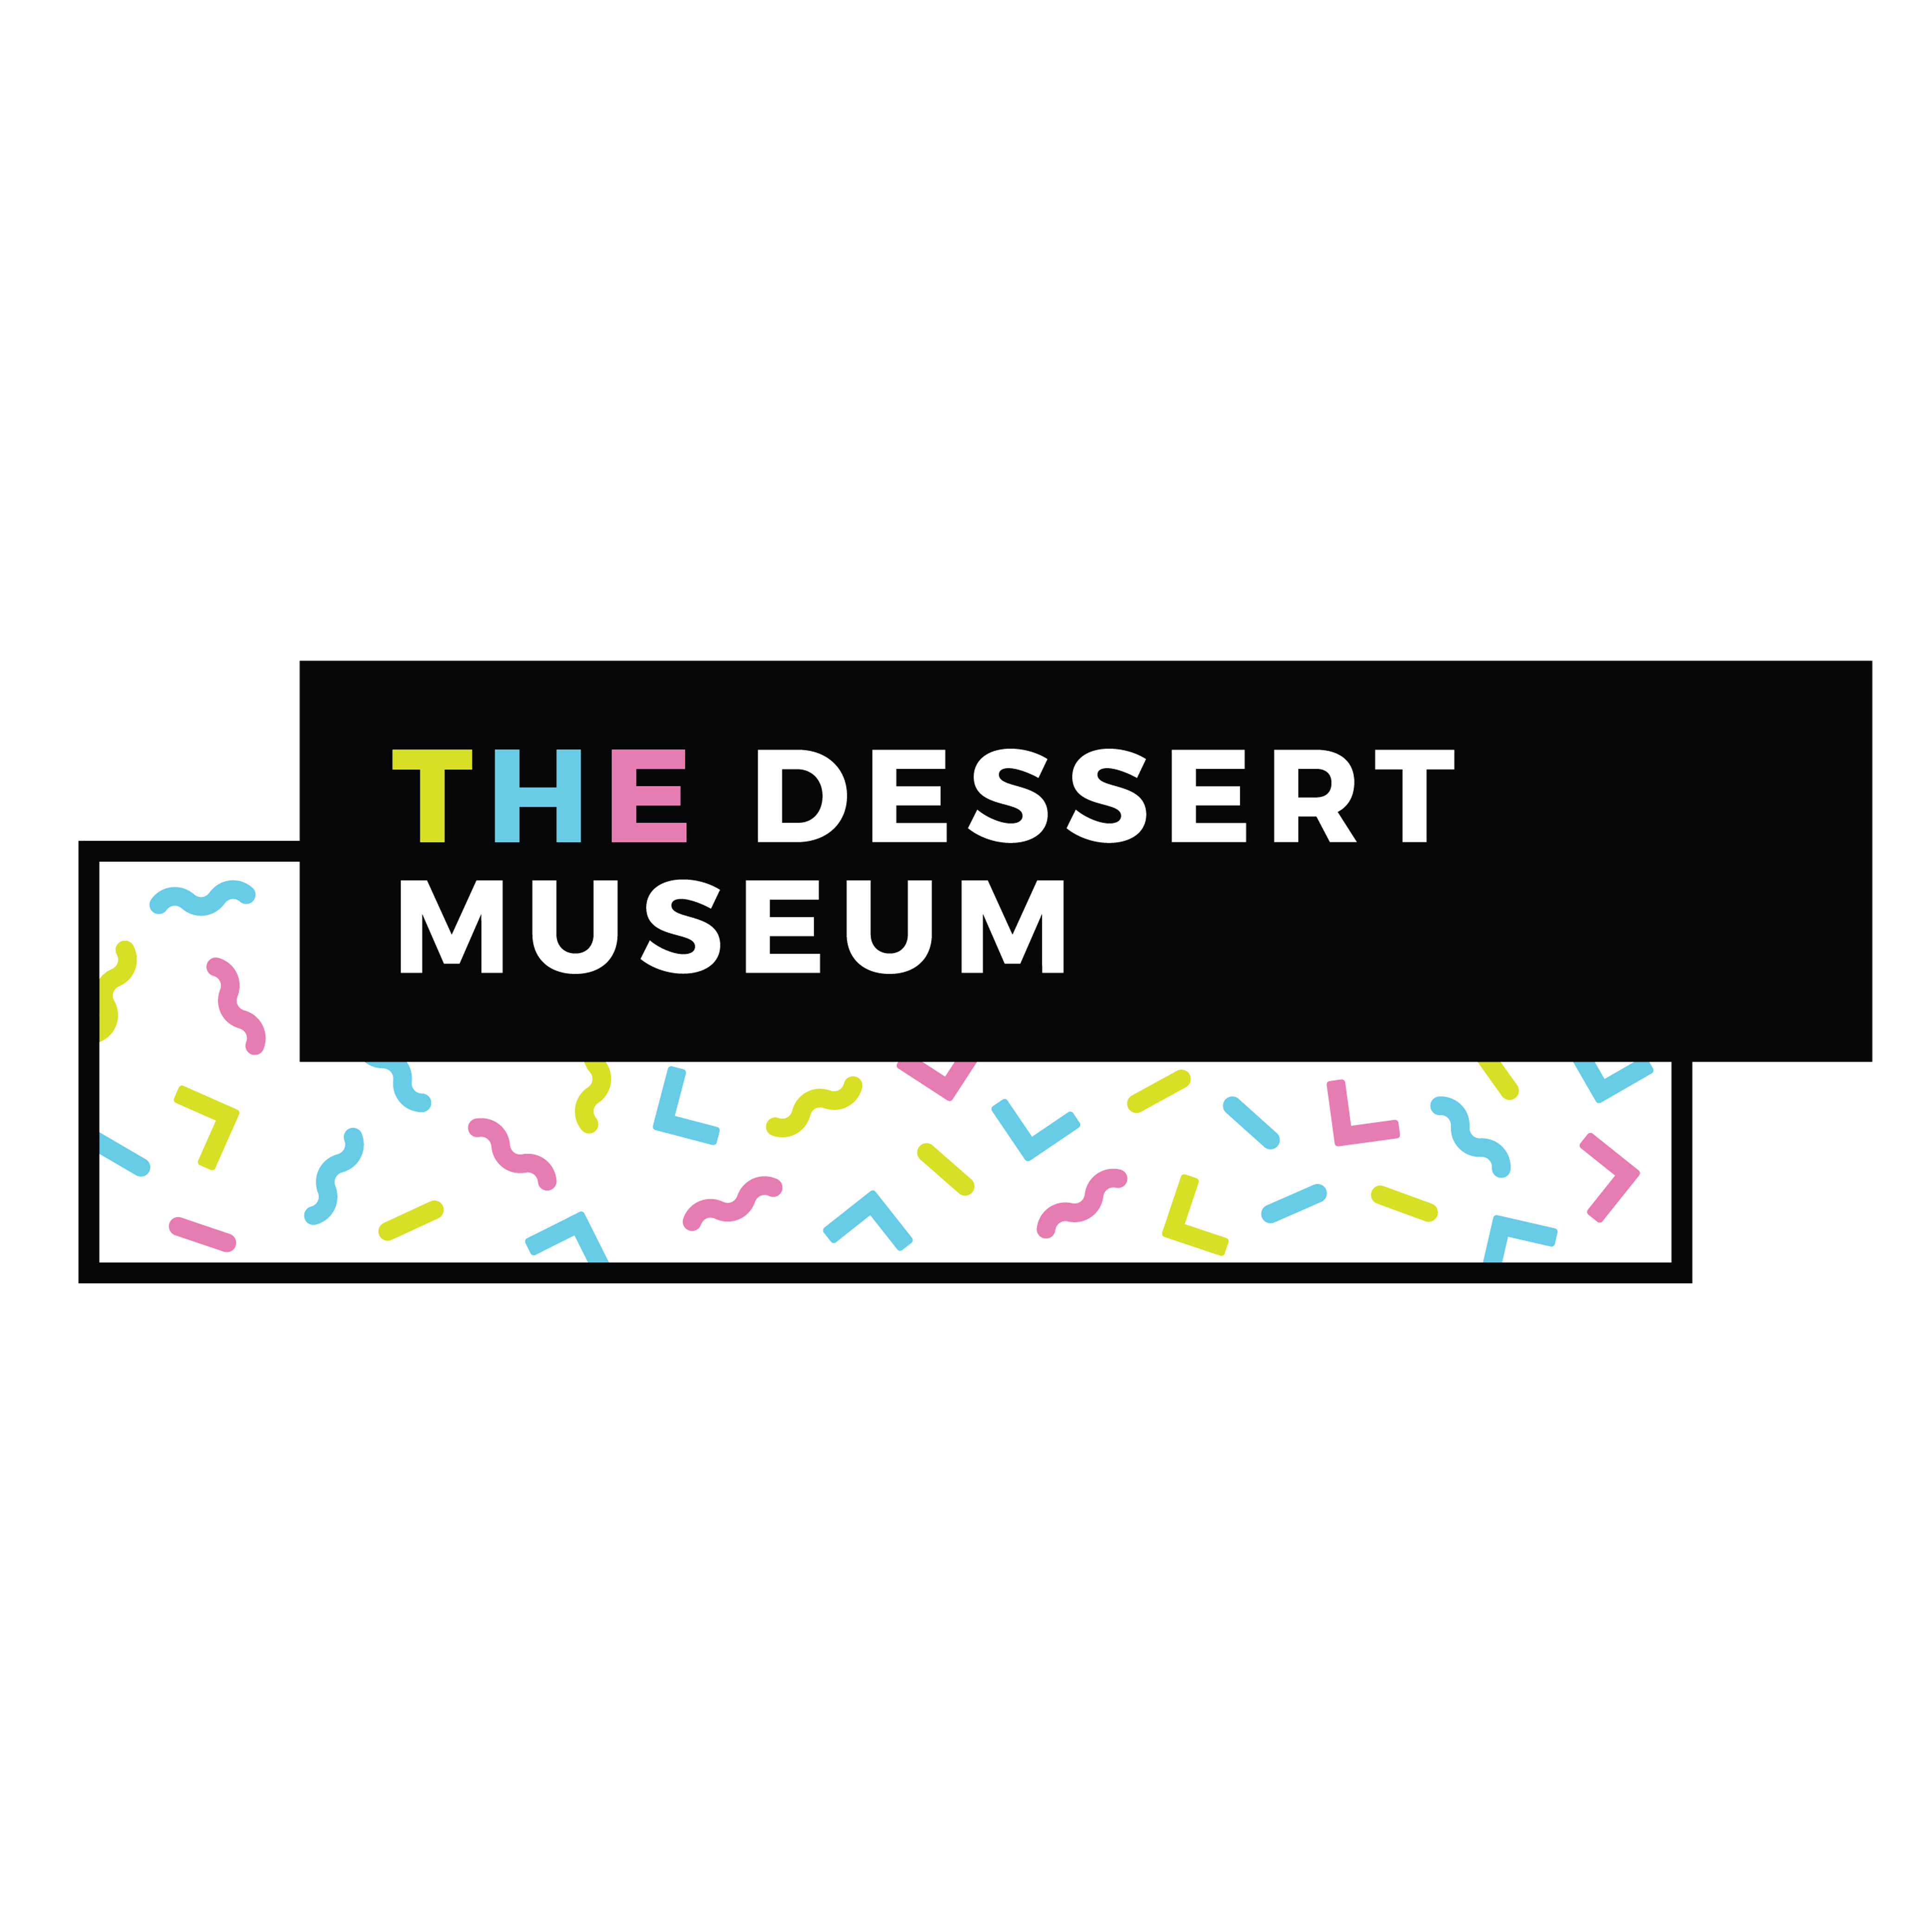 THE DESSERT MUSEUM